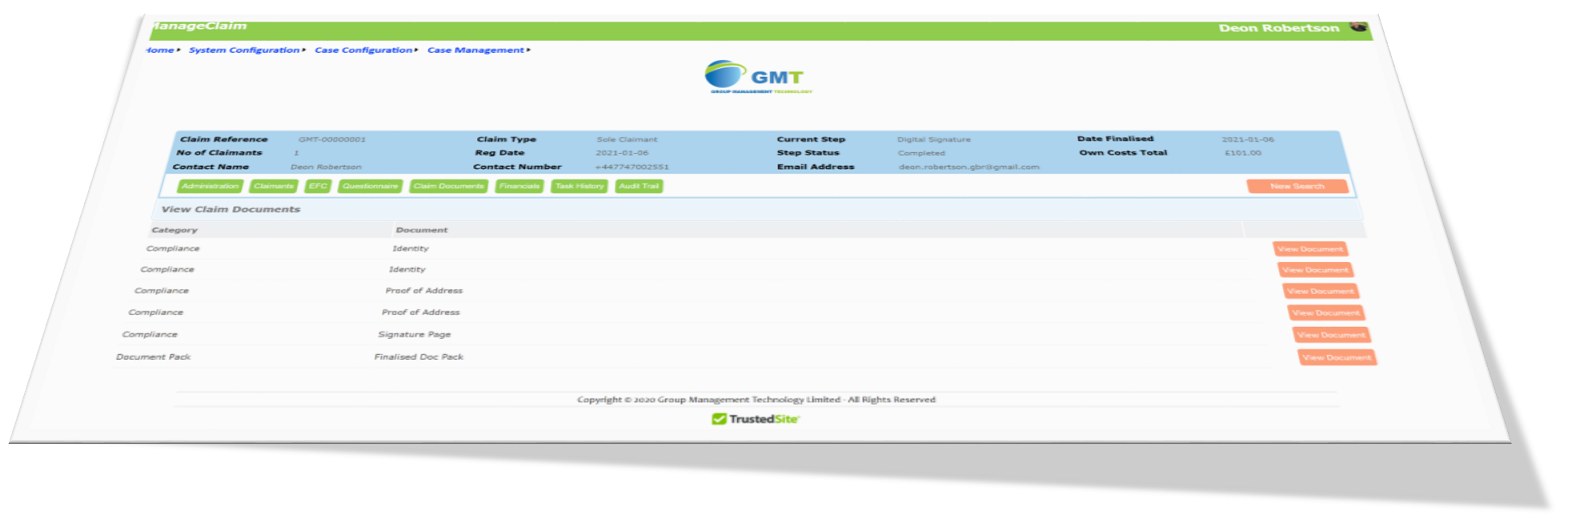 GMT's Enterprise Group Action Platform